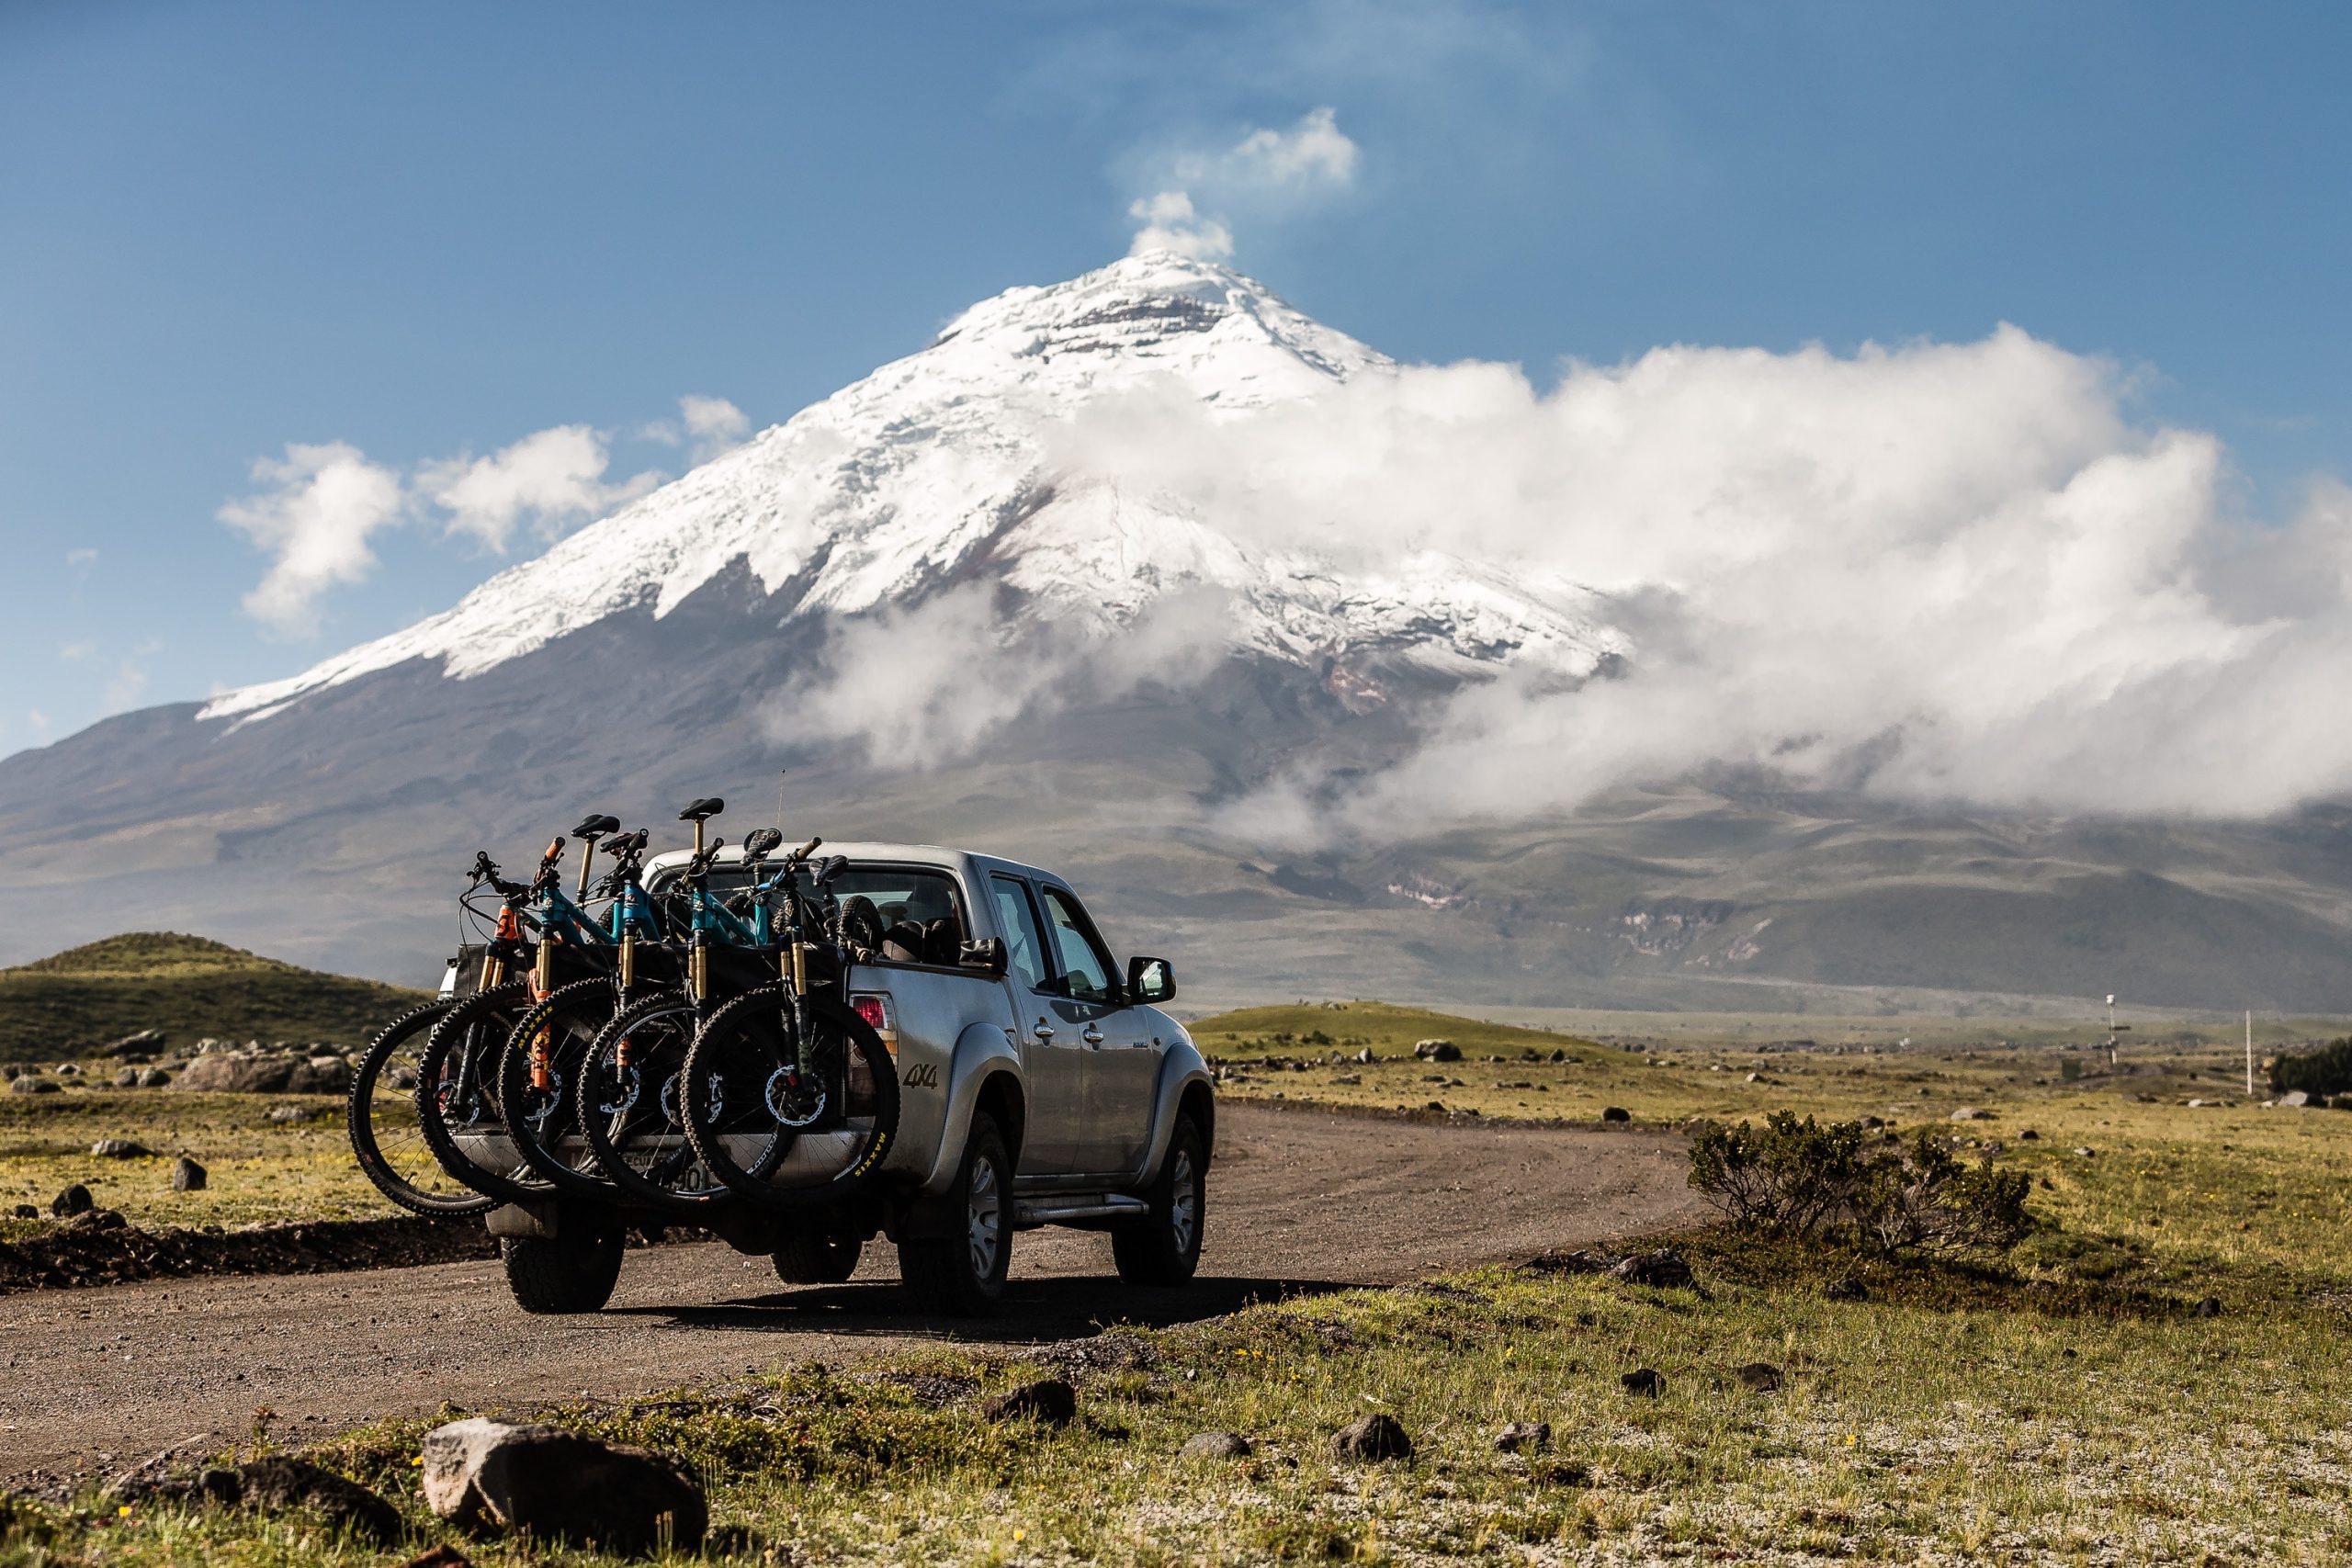 Heading towards the volcano - Ecuador MTB Film